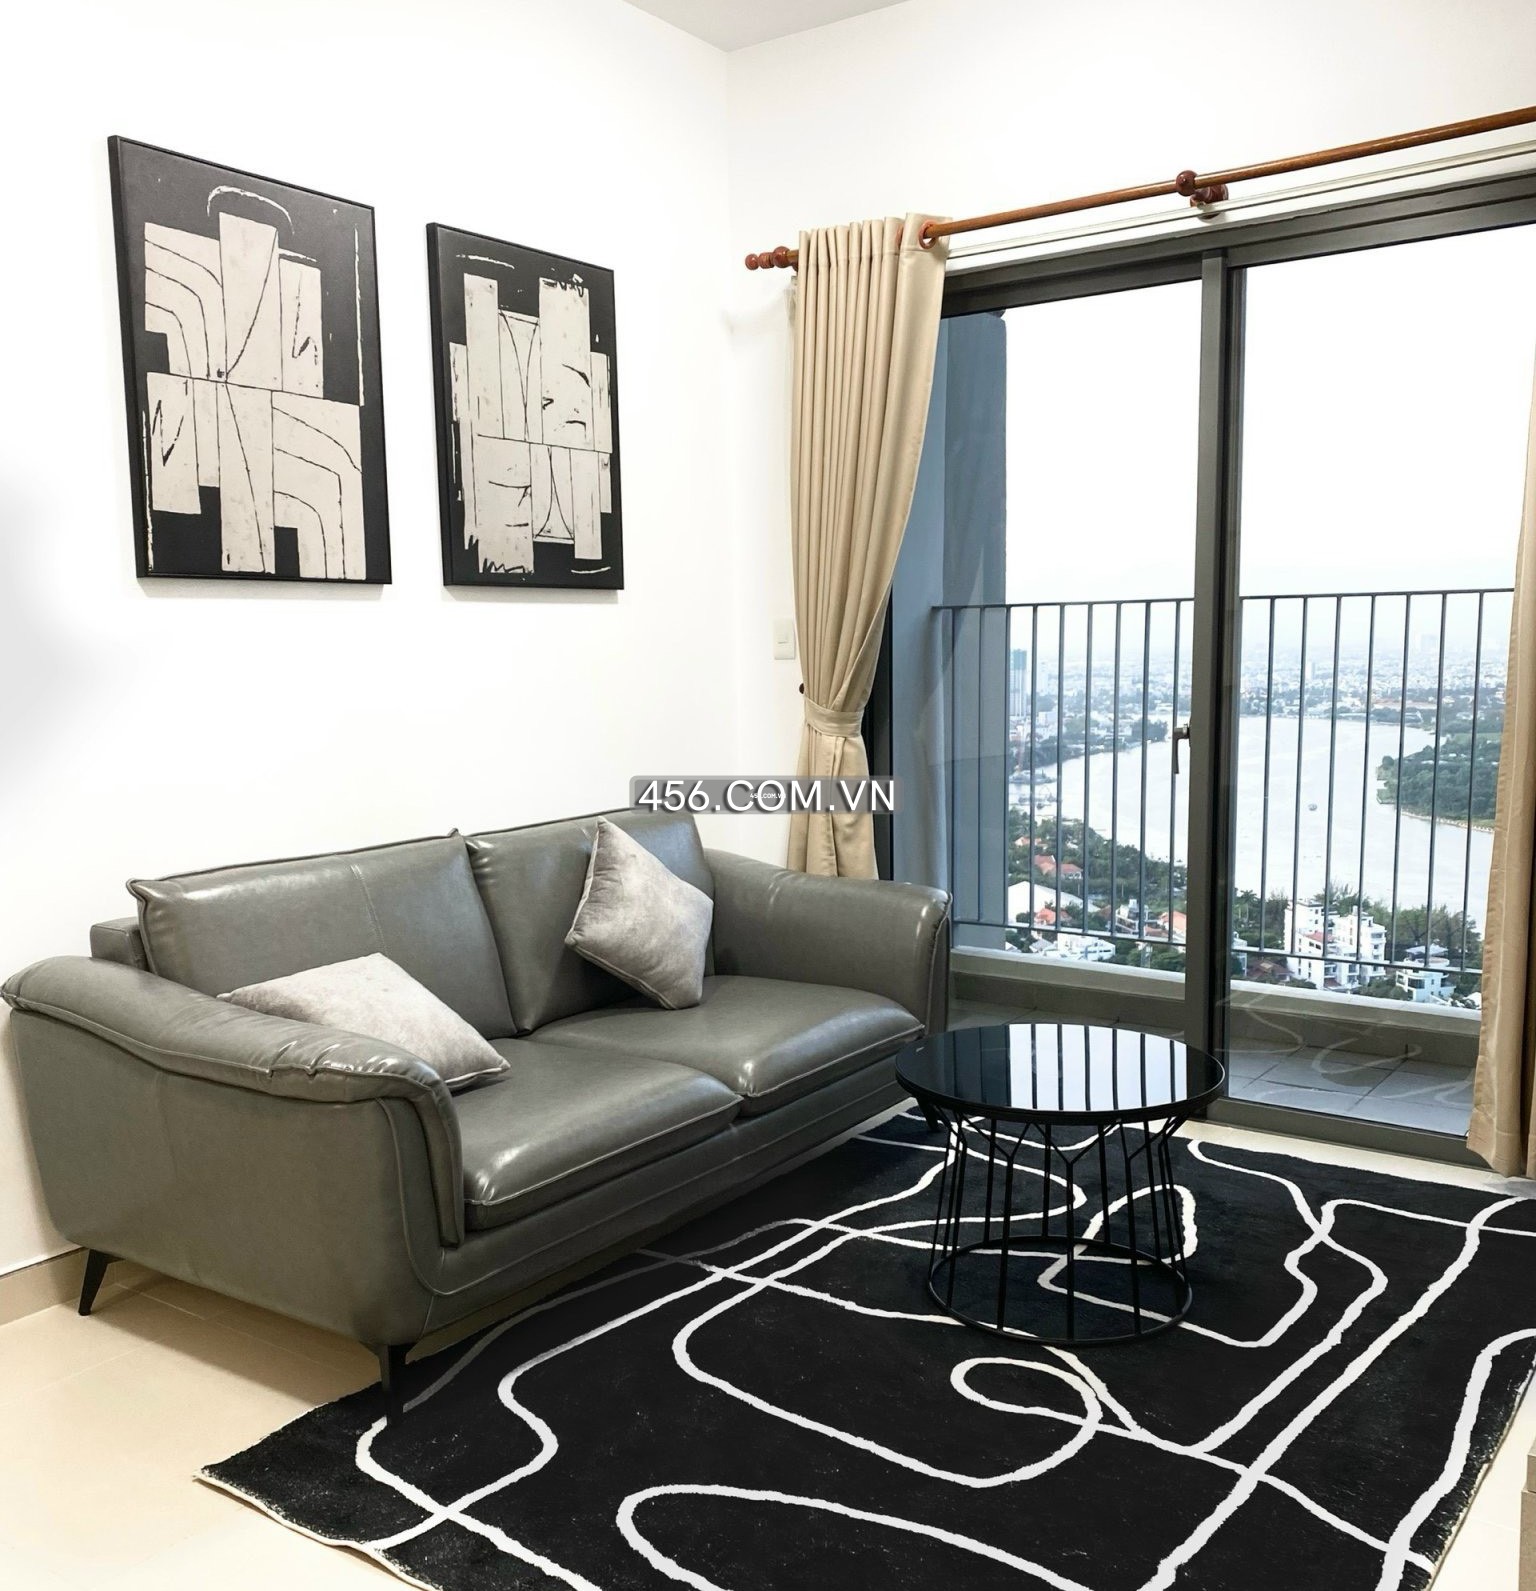 2 Bedrooms Masteri Thao Dien Apartment For...